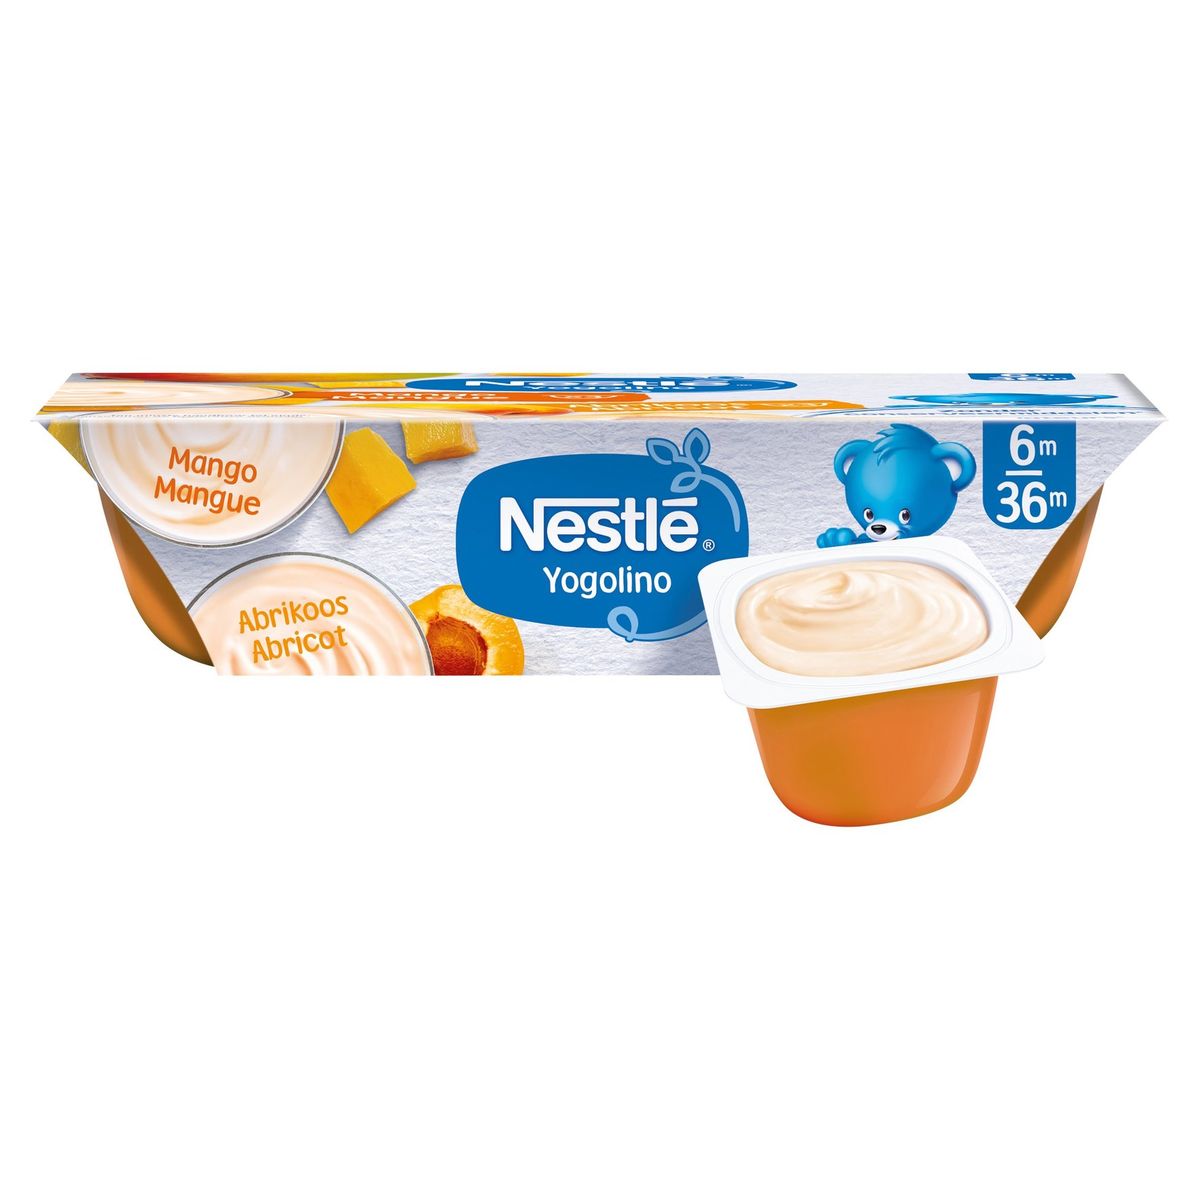 Nestlé Yogolino Mangue Abricot 6M-36M 6 x 60 g